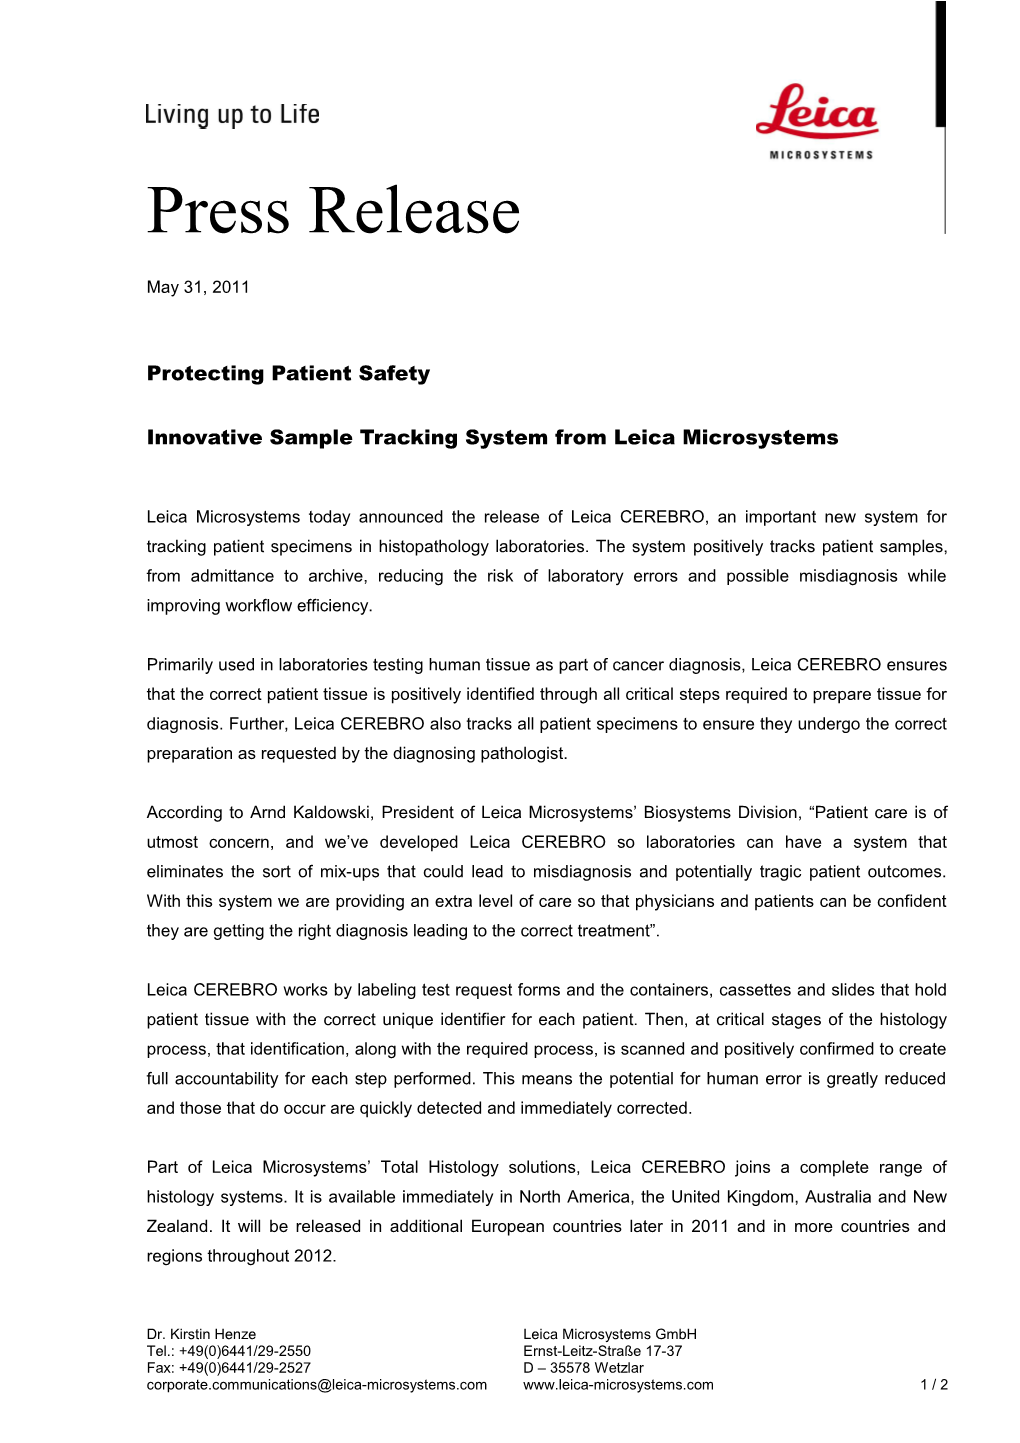 Leica Microsystems Press Release s2